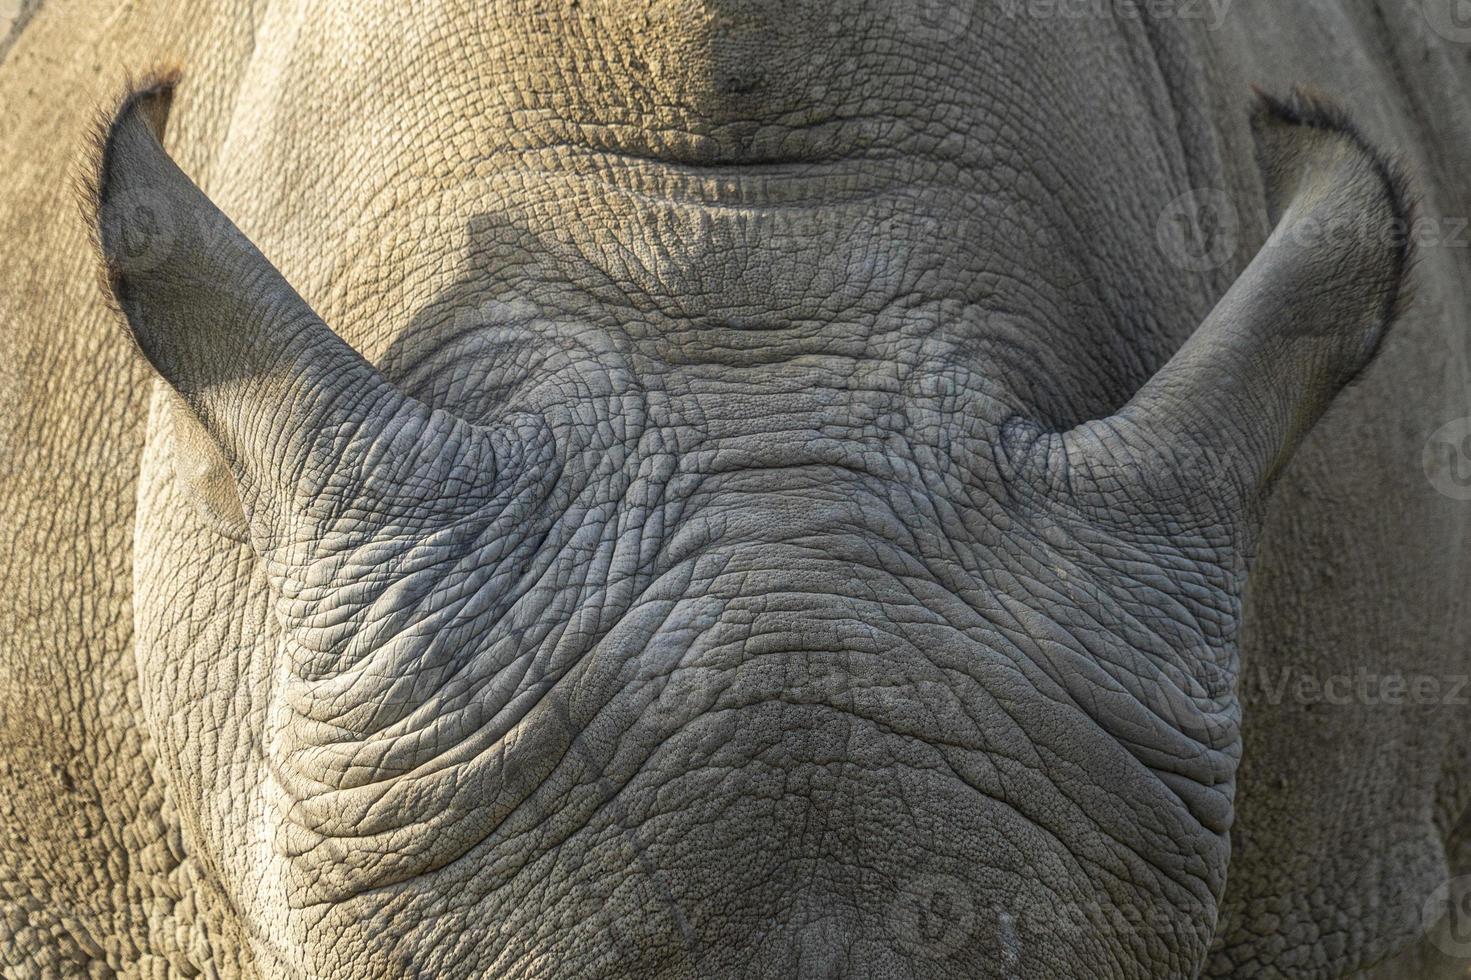 Rhino Rhinoceros close up detail of ears photo